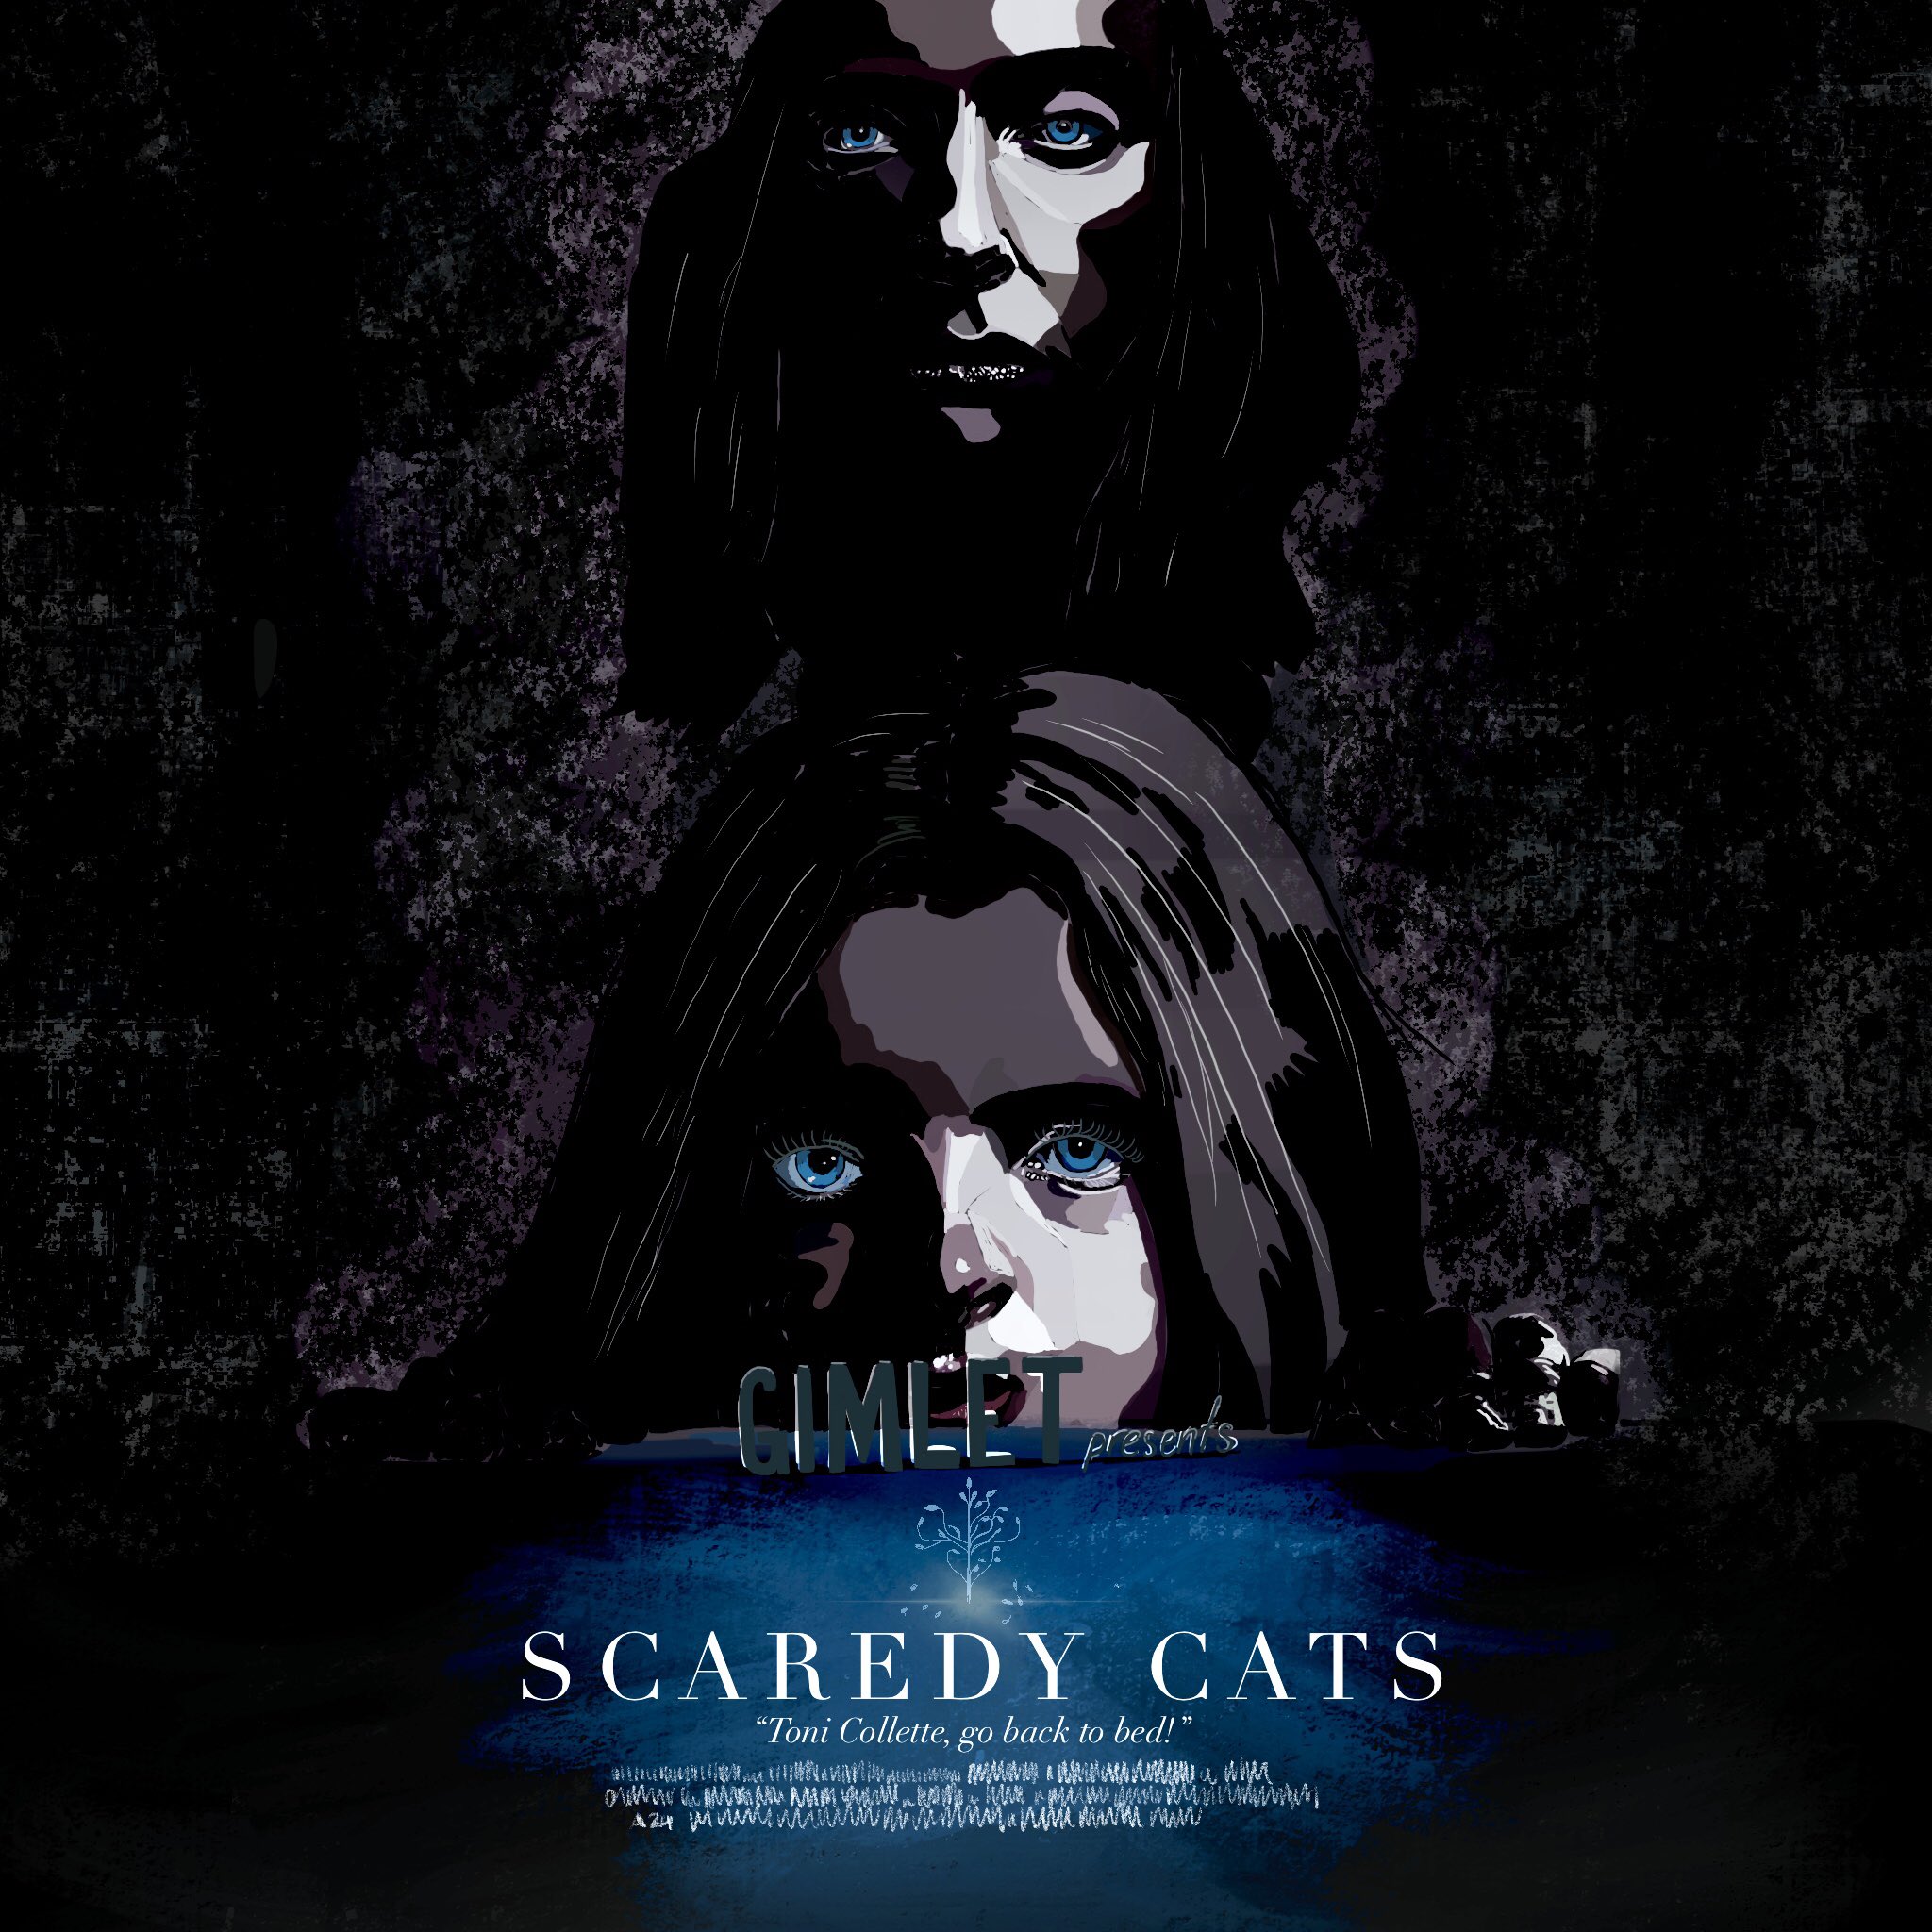 The Scaredy Cats Horror Show - #3 Alien : r/gimlet